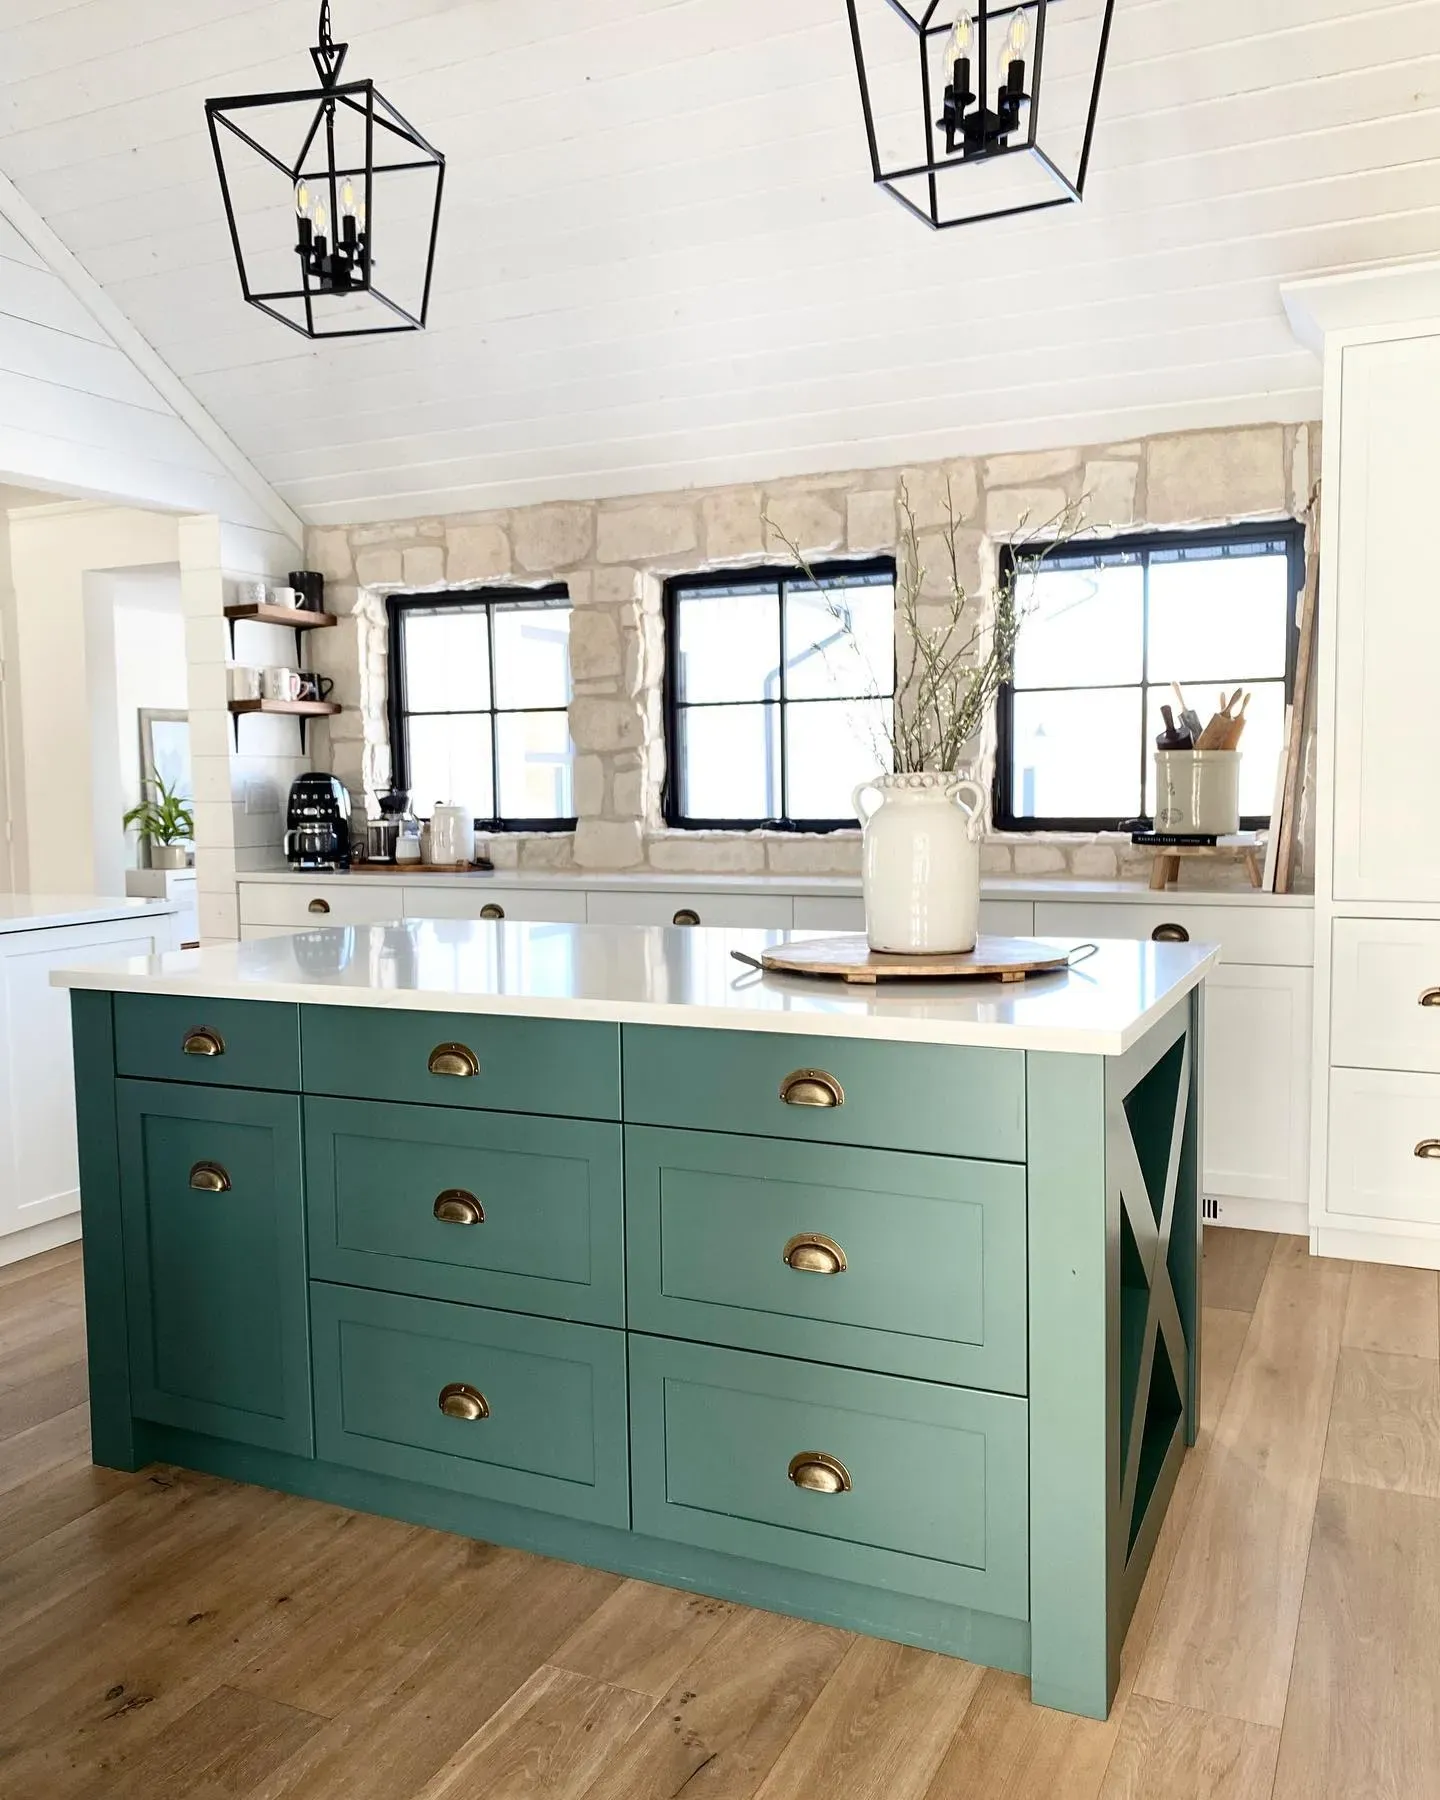 Benjamin Moore Jack Pine kitchen cabinets paint review